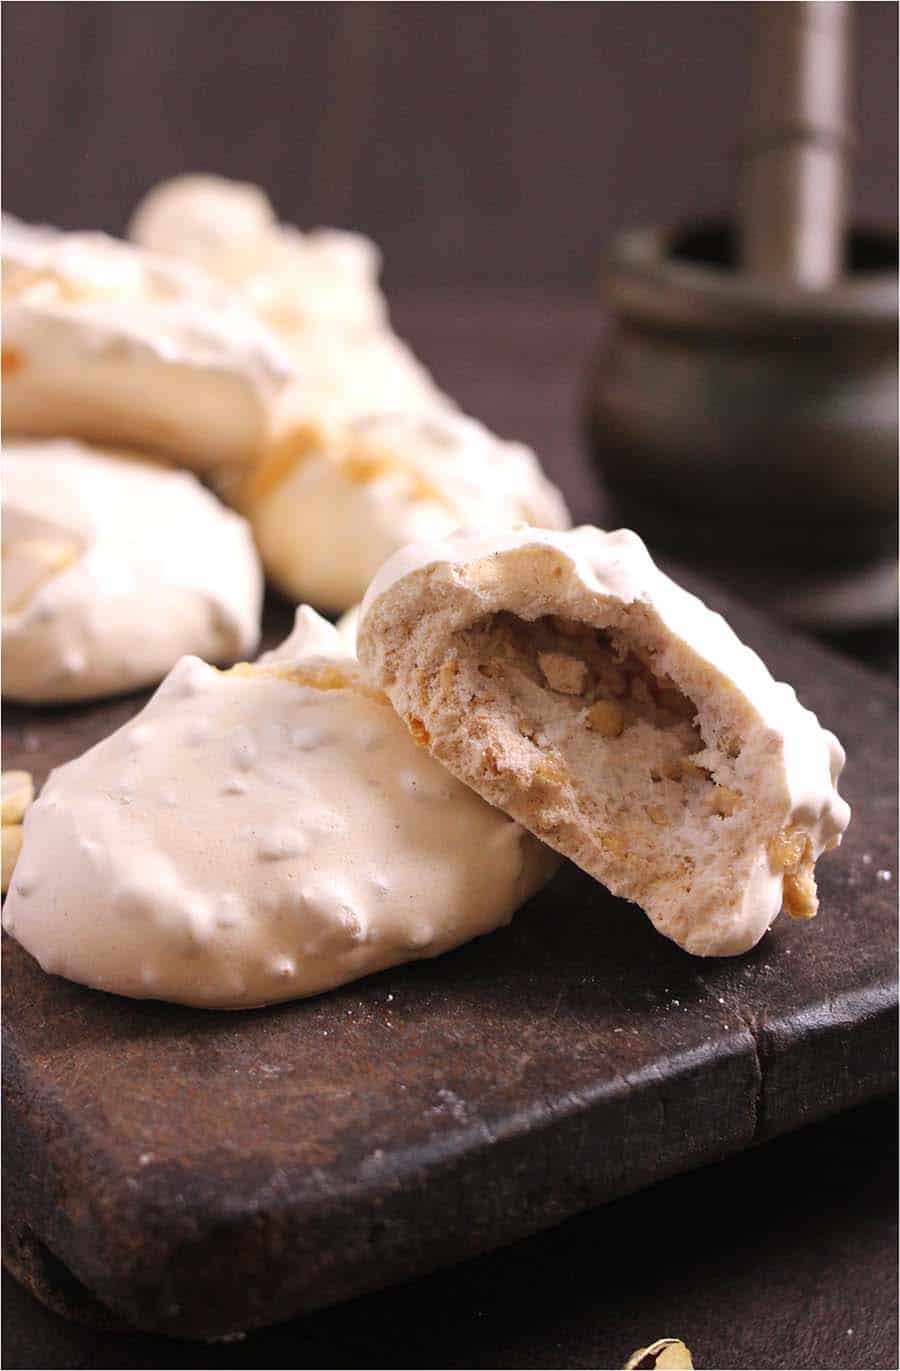 cashew & egg recipes, pavlova, #cookies #Macaron #Macaroons #Meringue #easyrecipes #indiandesserts